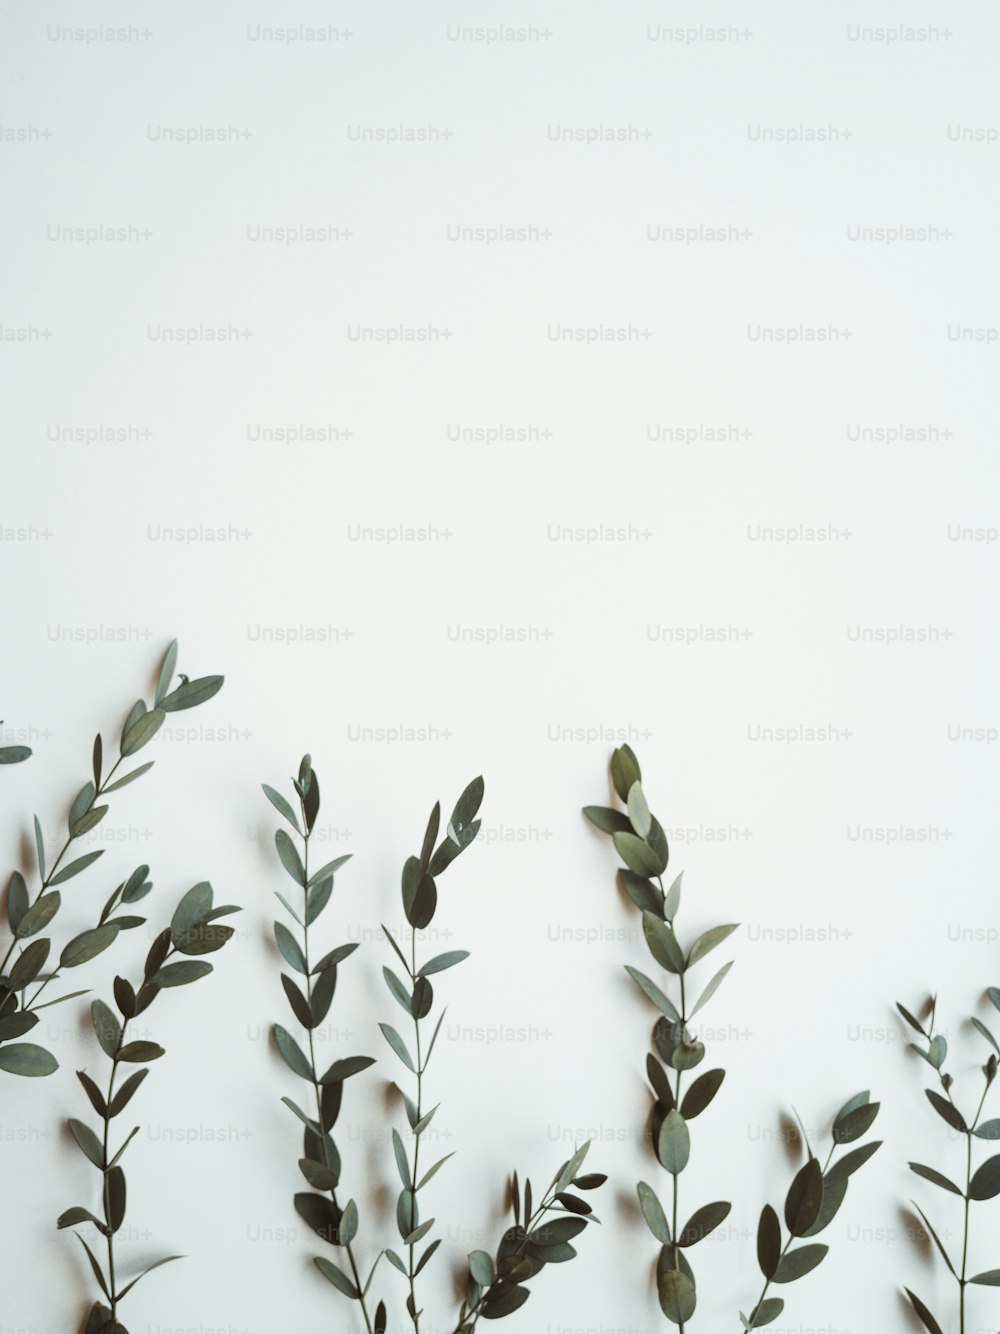 Un gruppo di piante verdi su una parete bianca